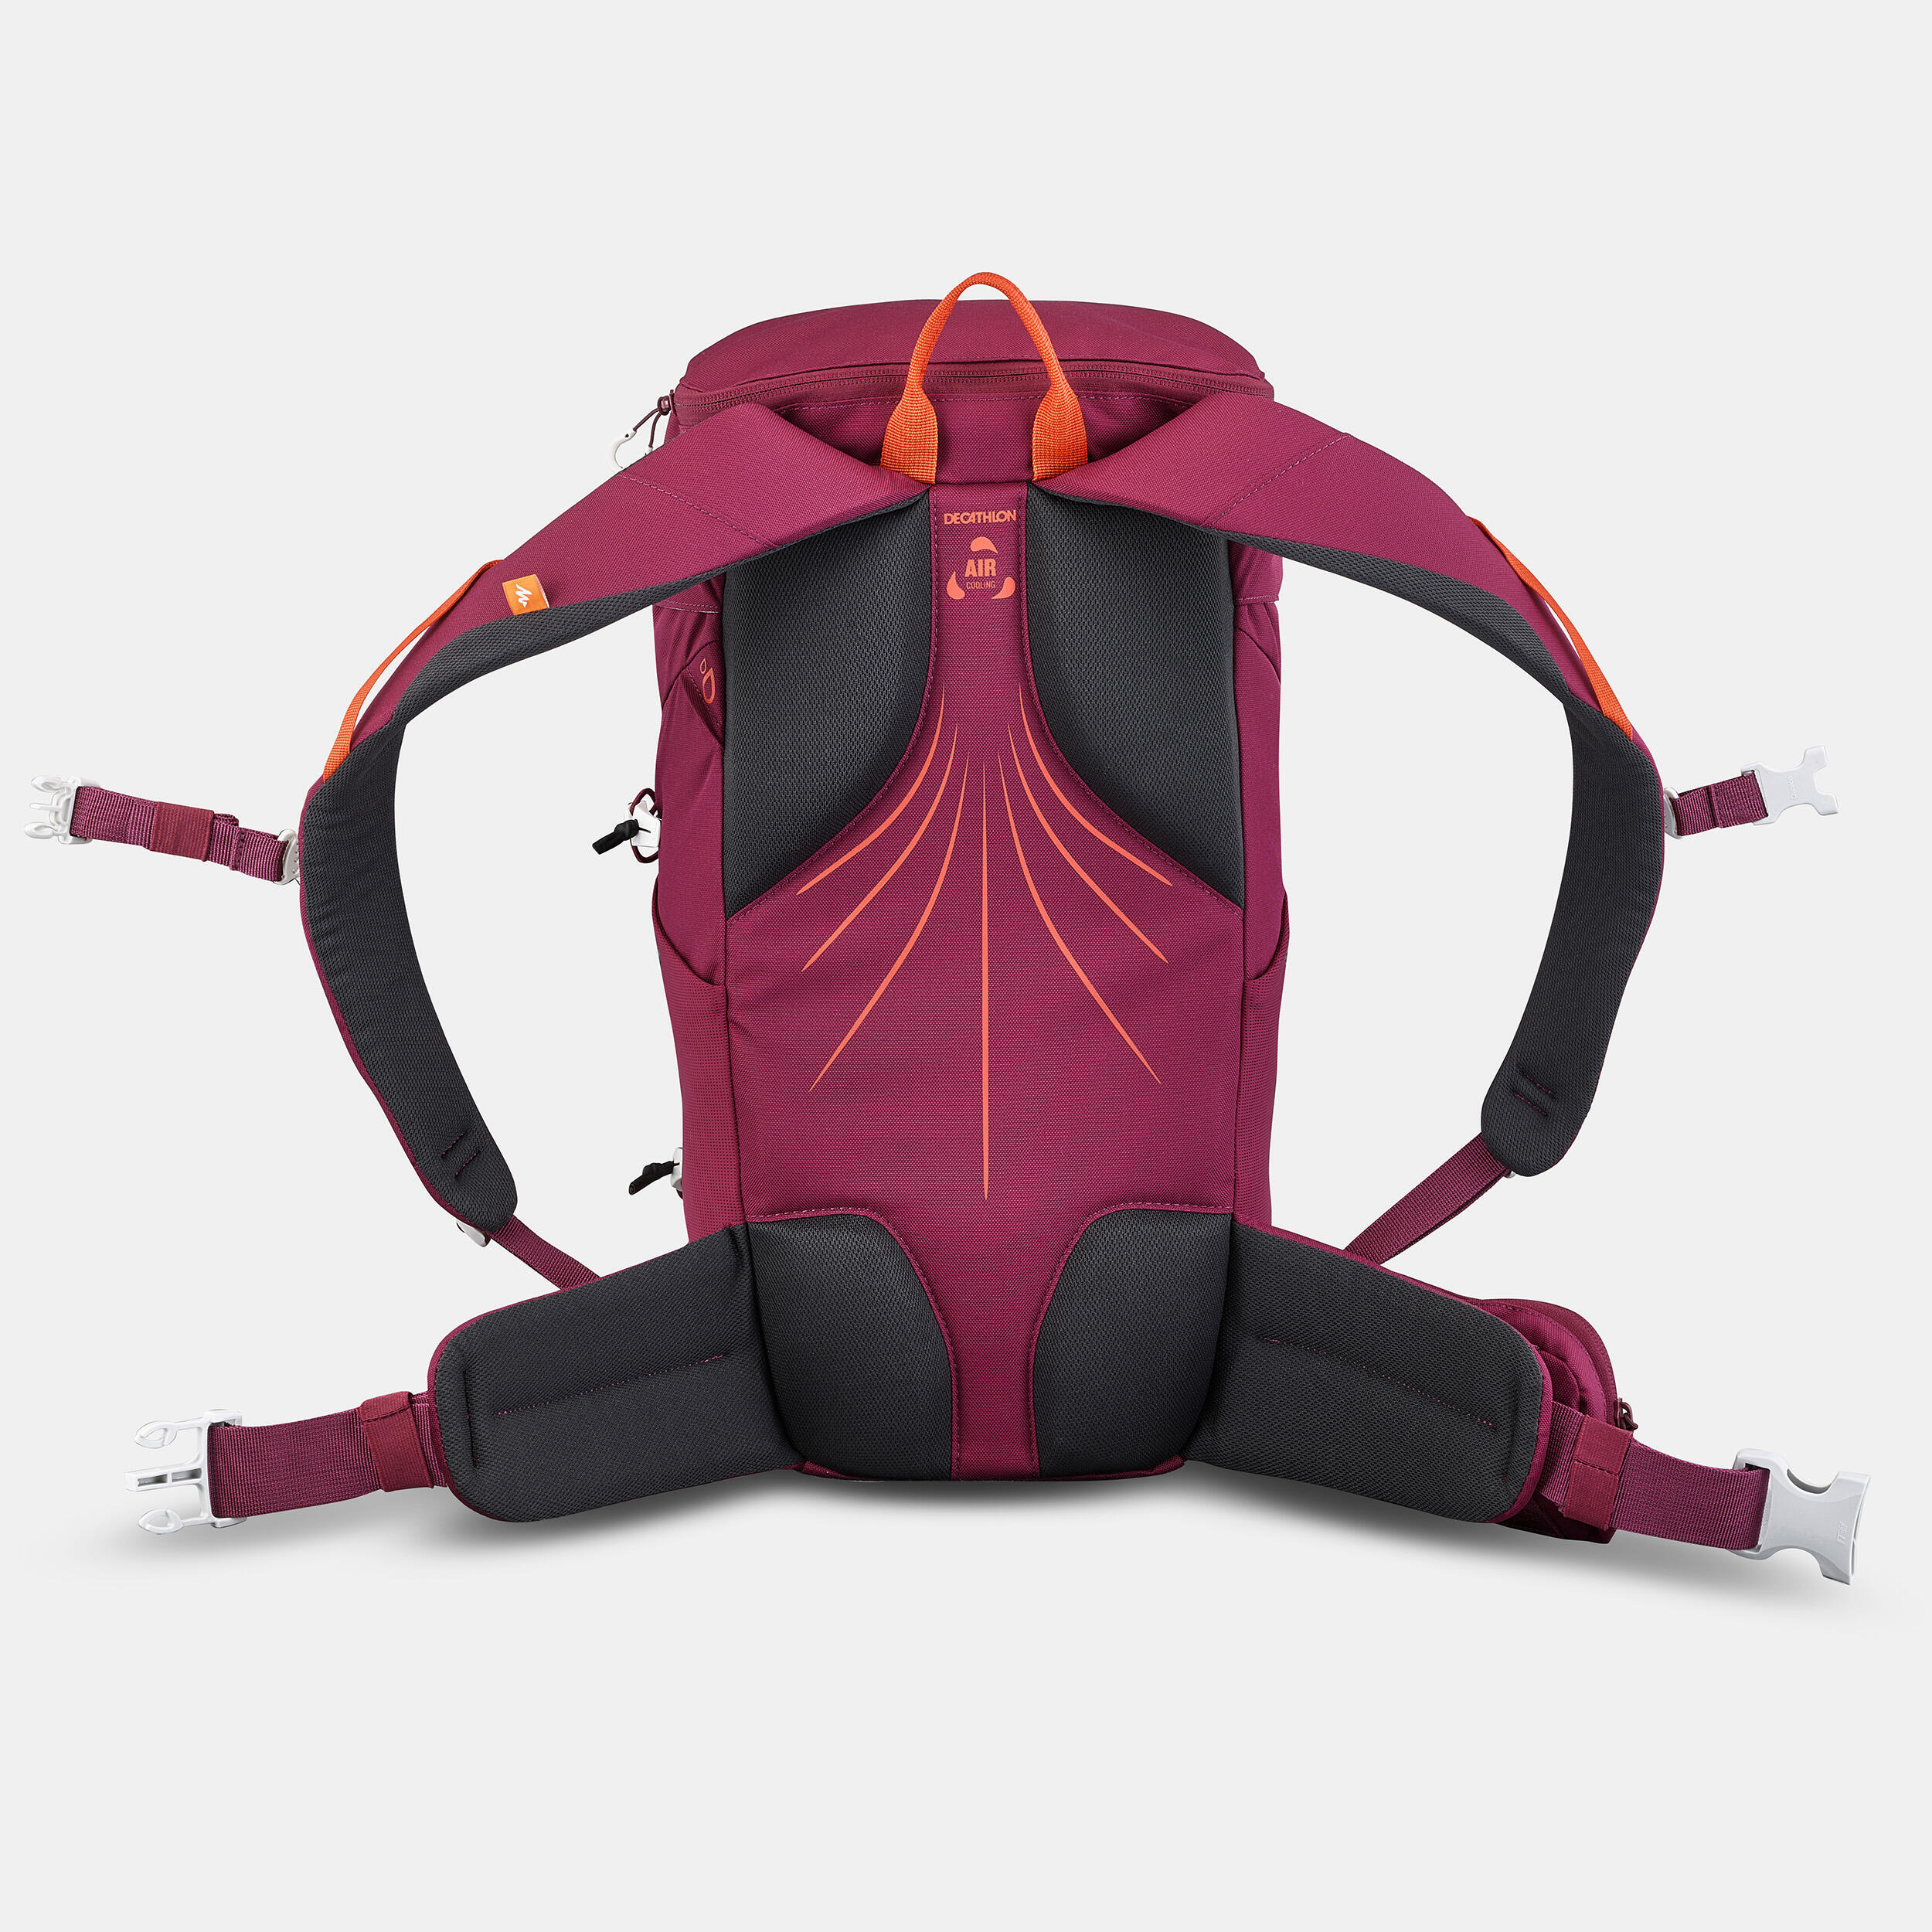 Mountain hiking backpack 20L - MH100 QUECHUA | Decathlon